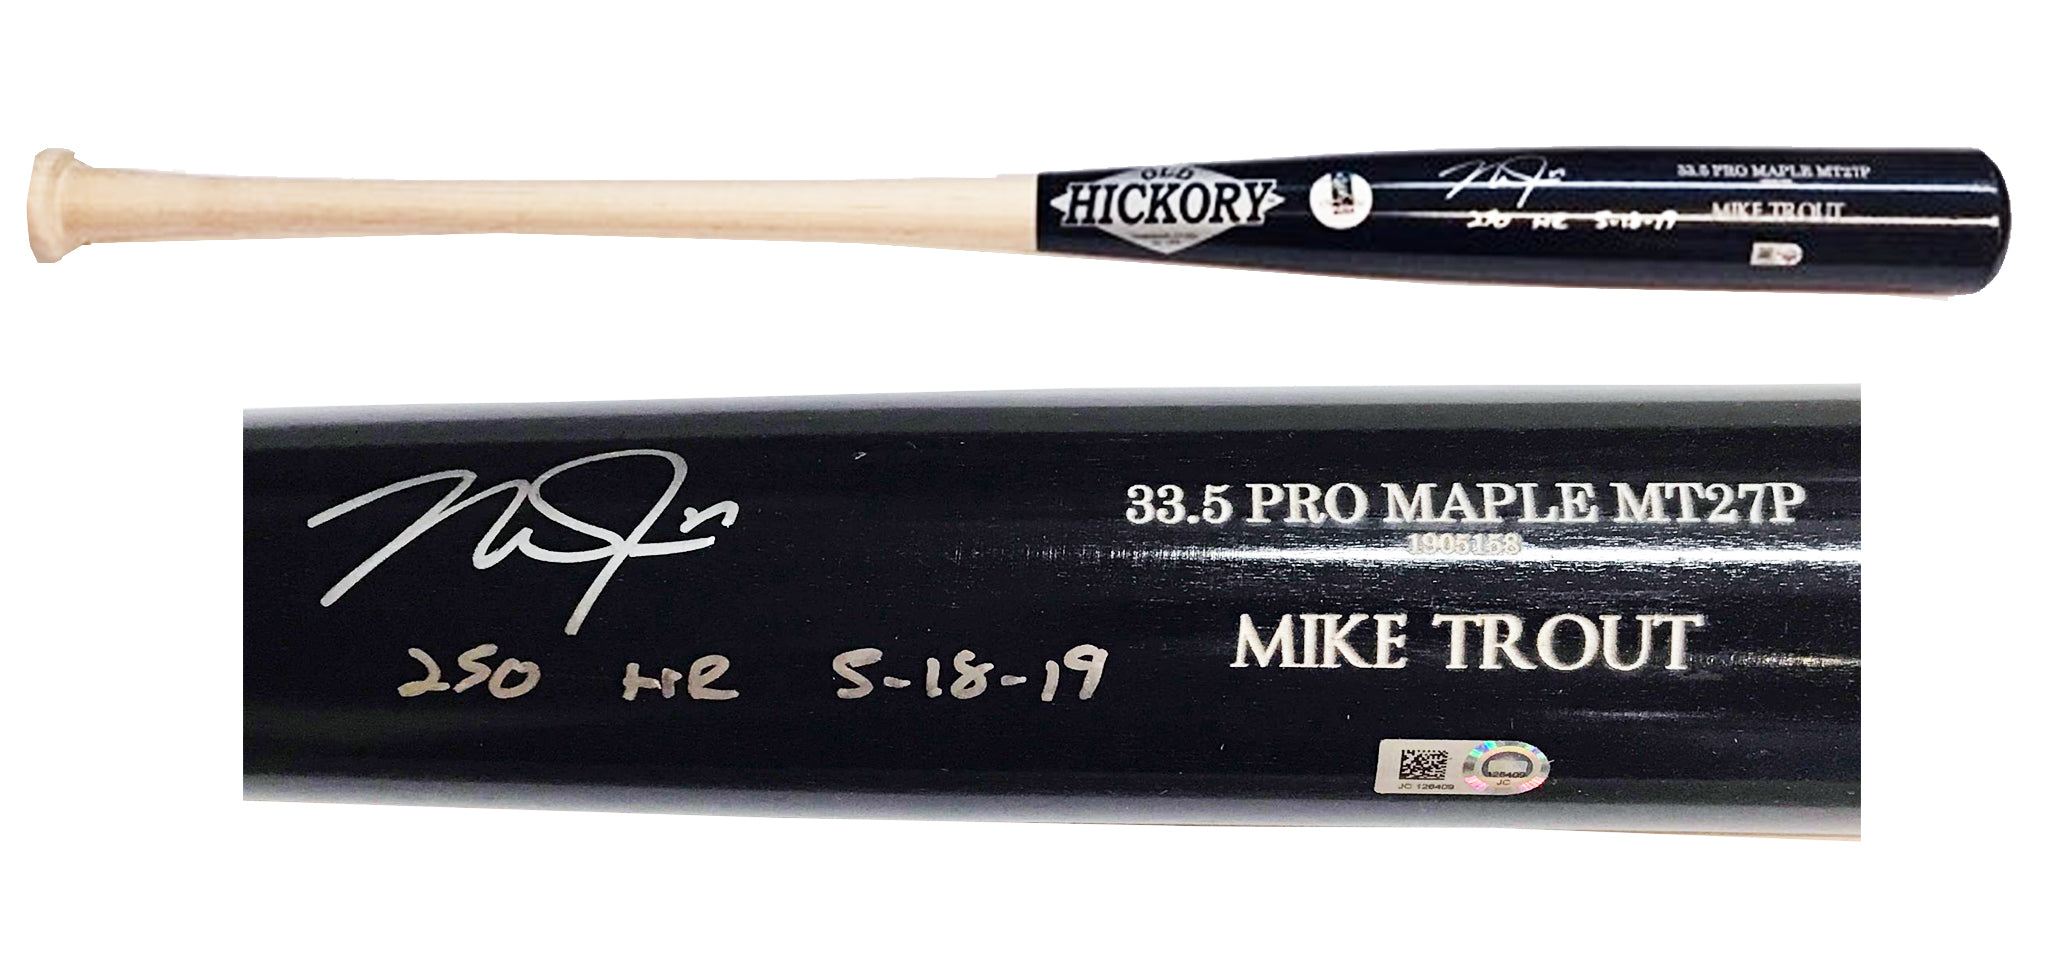 Official MLB Autographed Baseball Bats